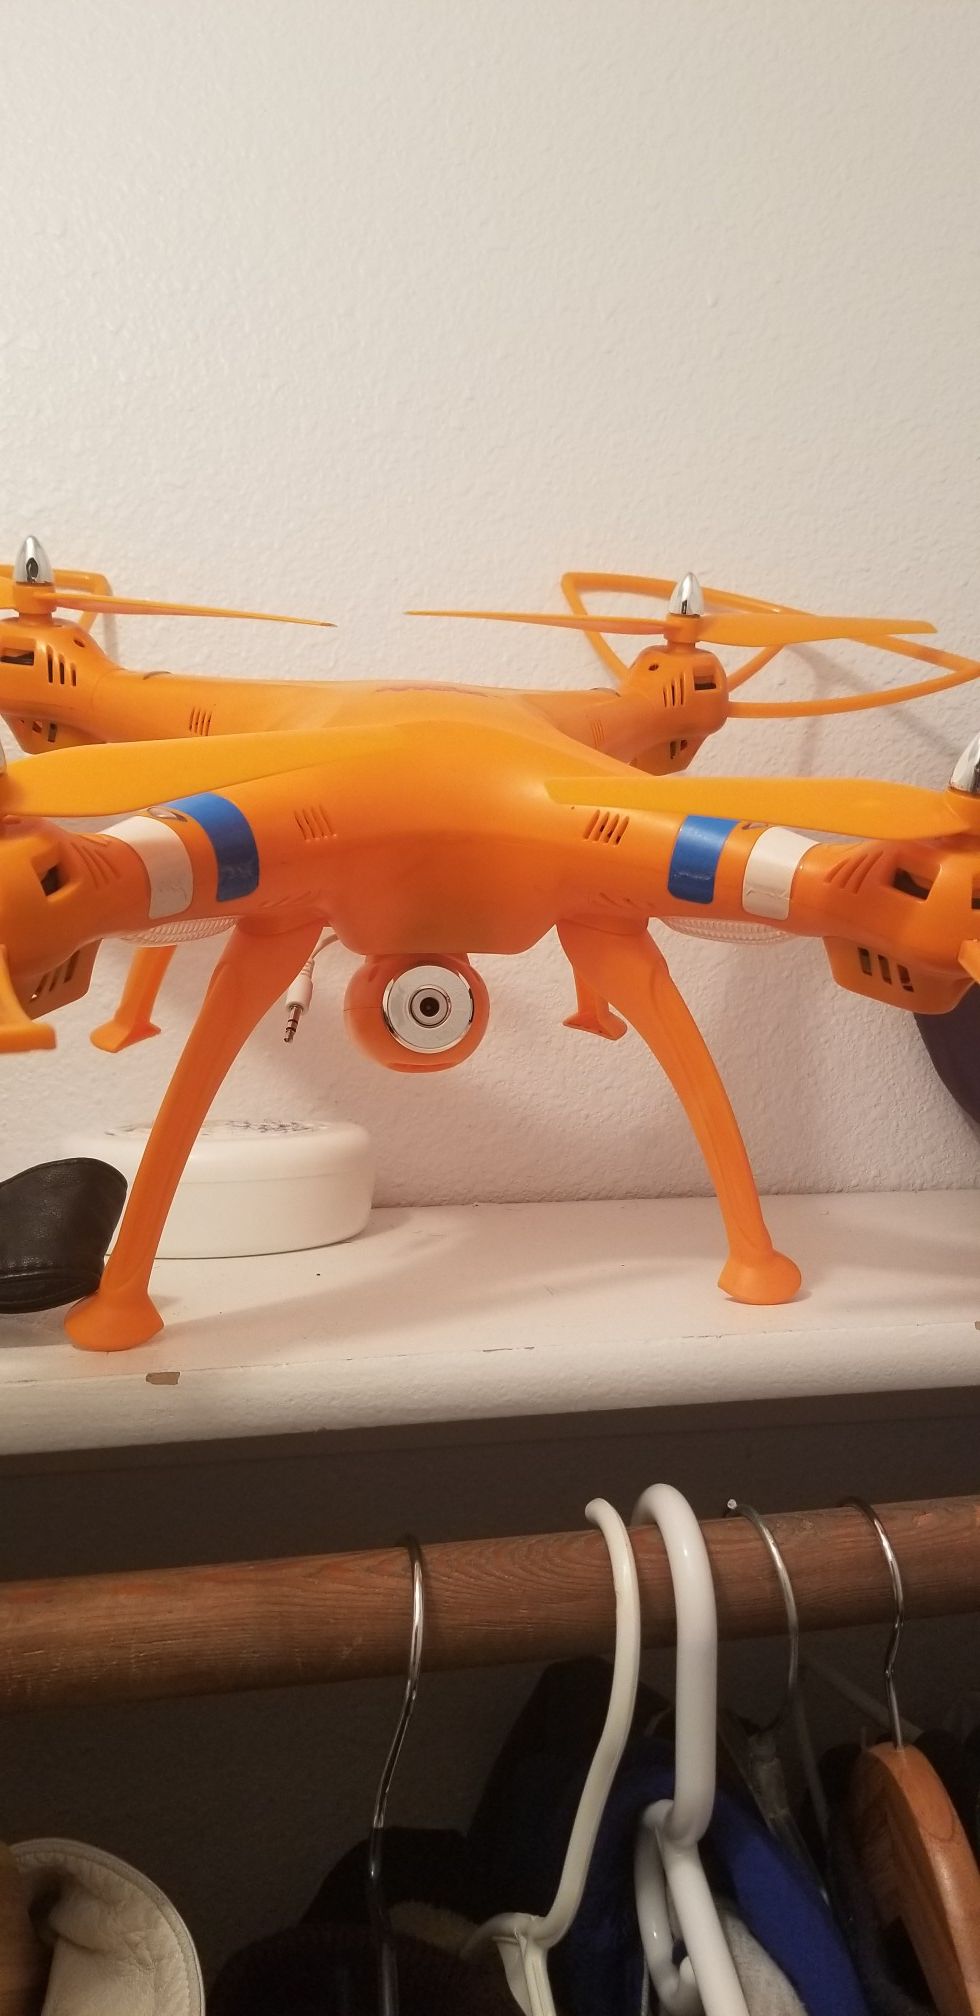 SYMA drone